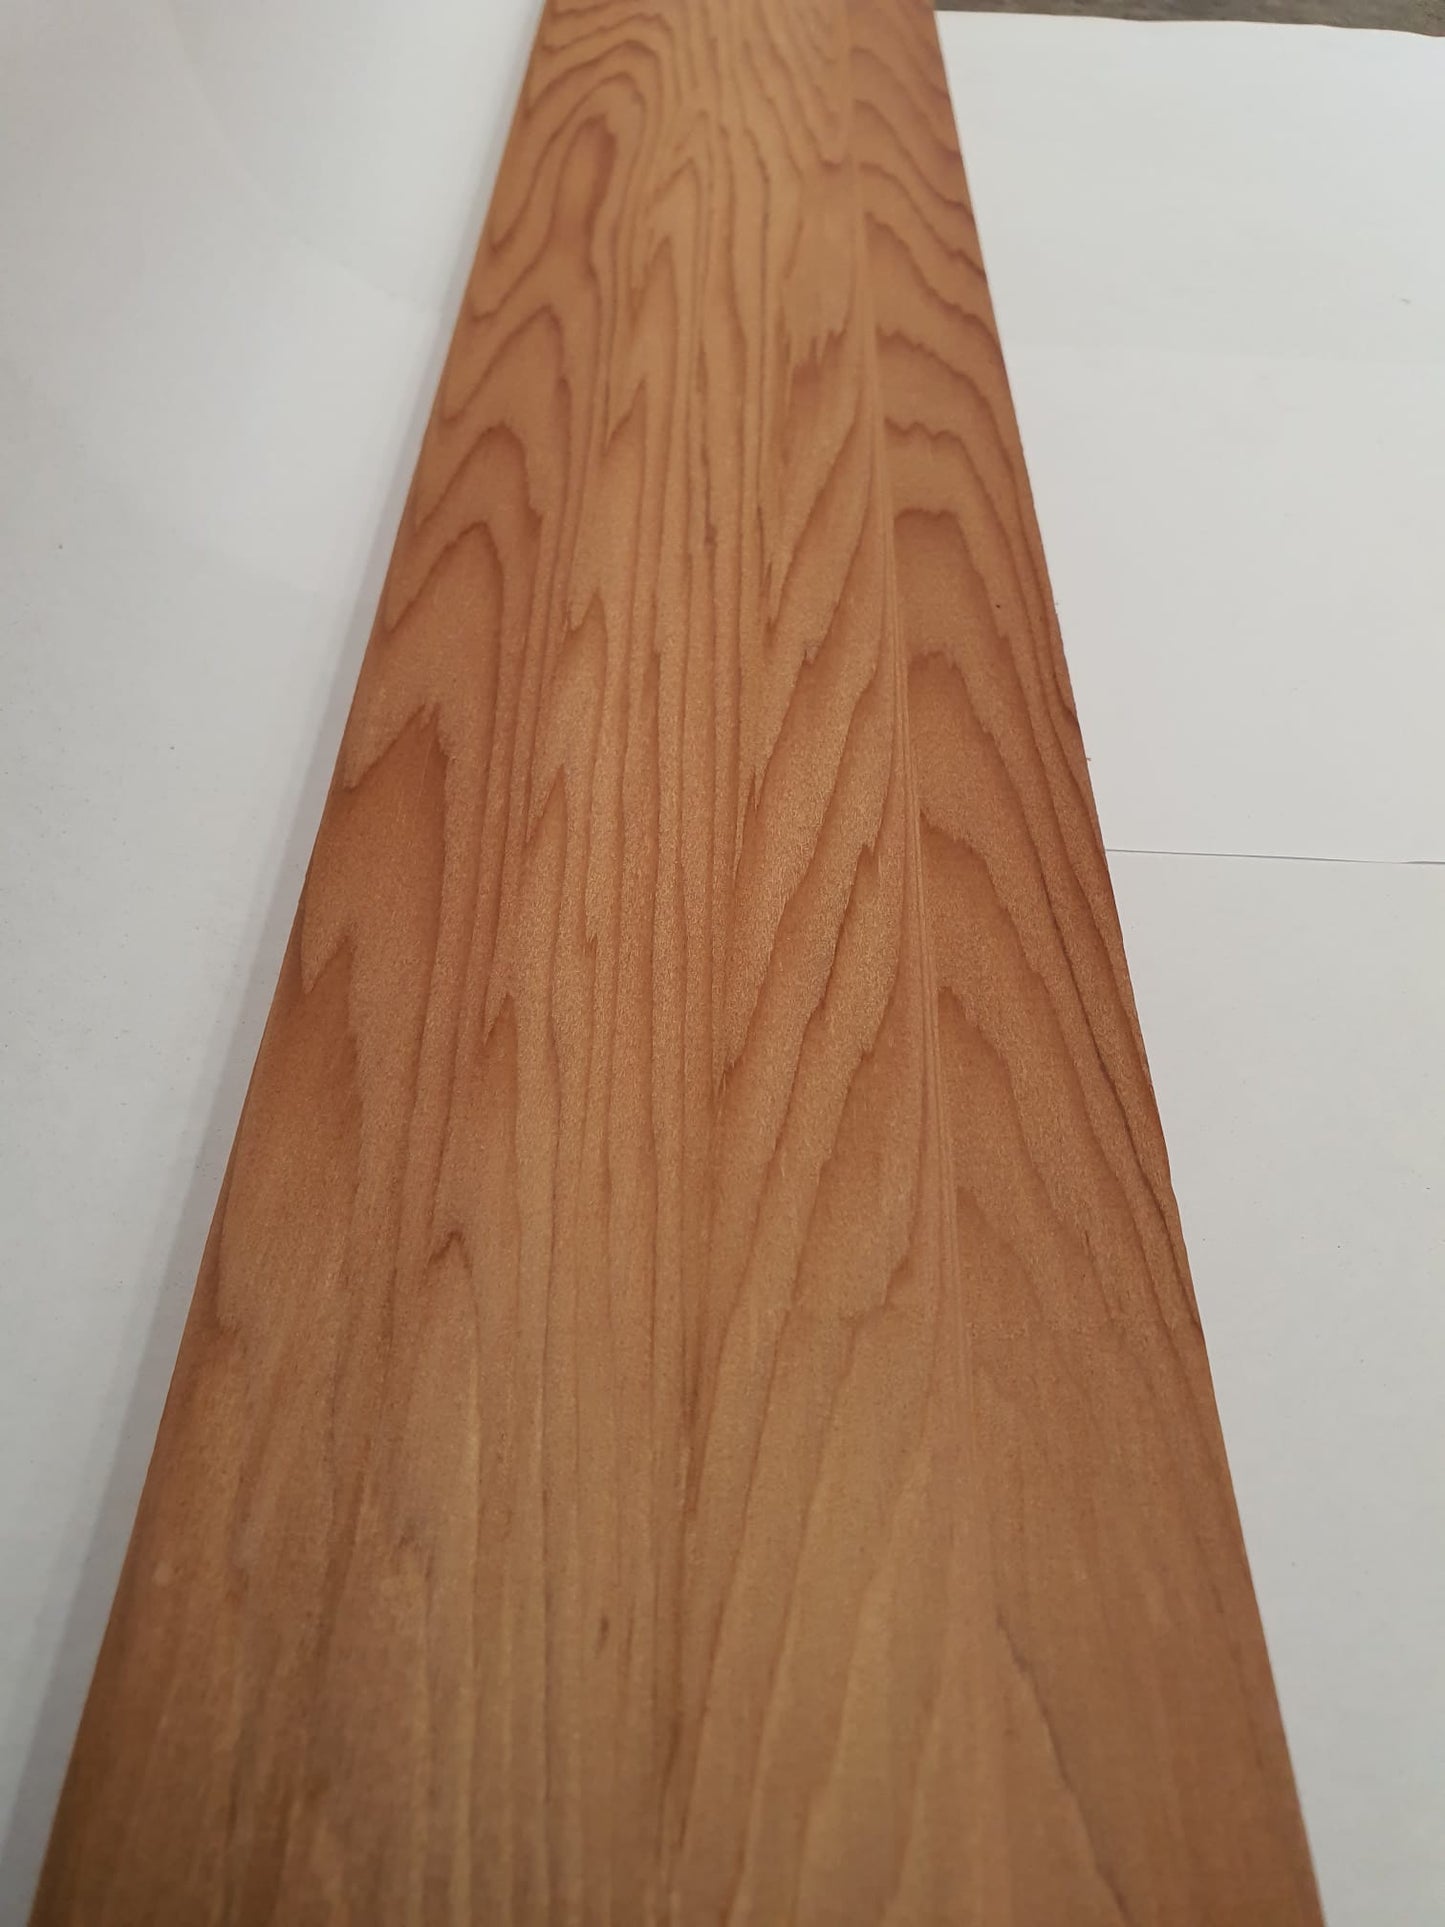 WESTERN RED CEDAR 84 x 10mm (Sauna Profile)